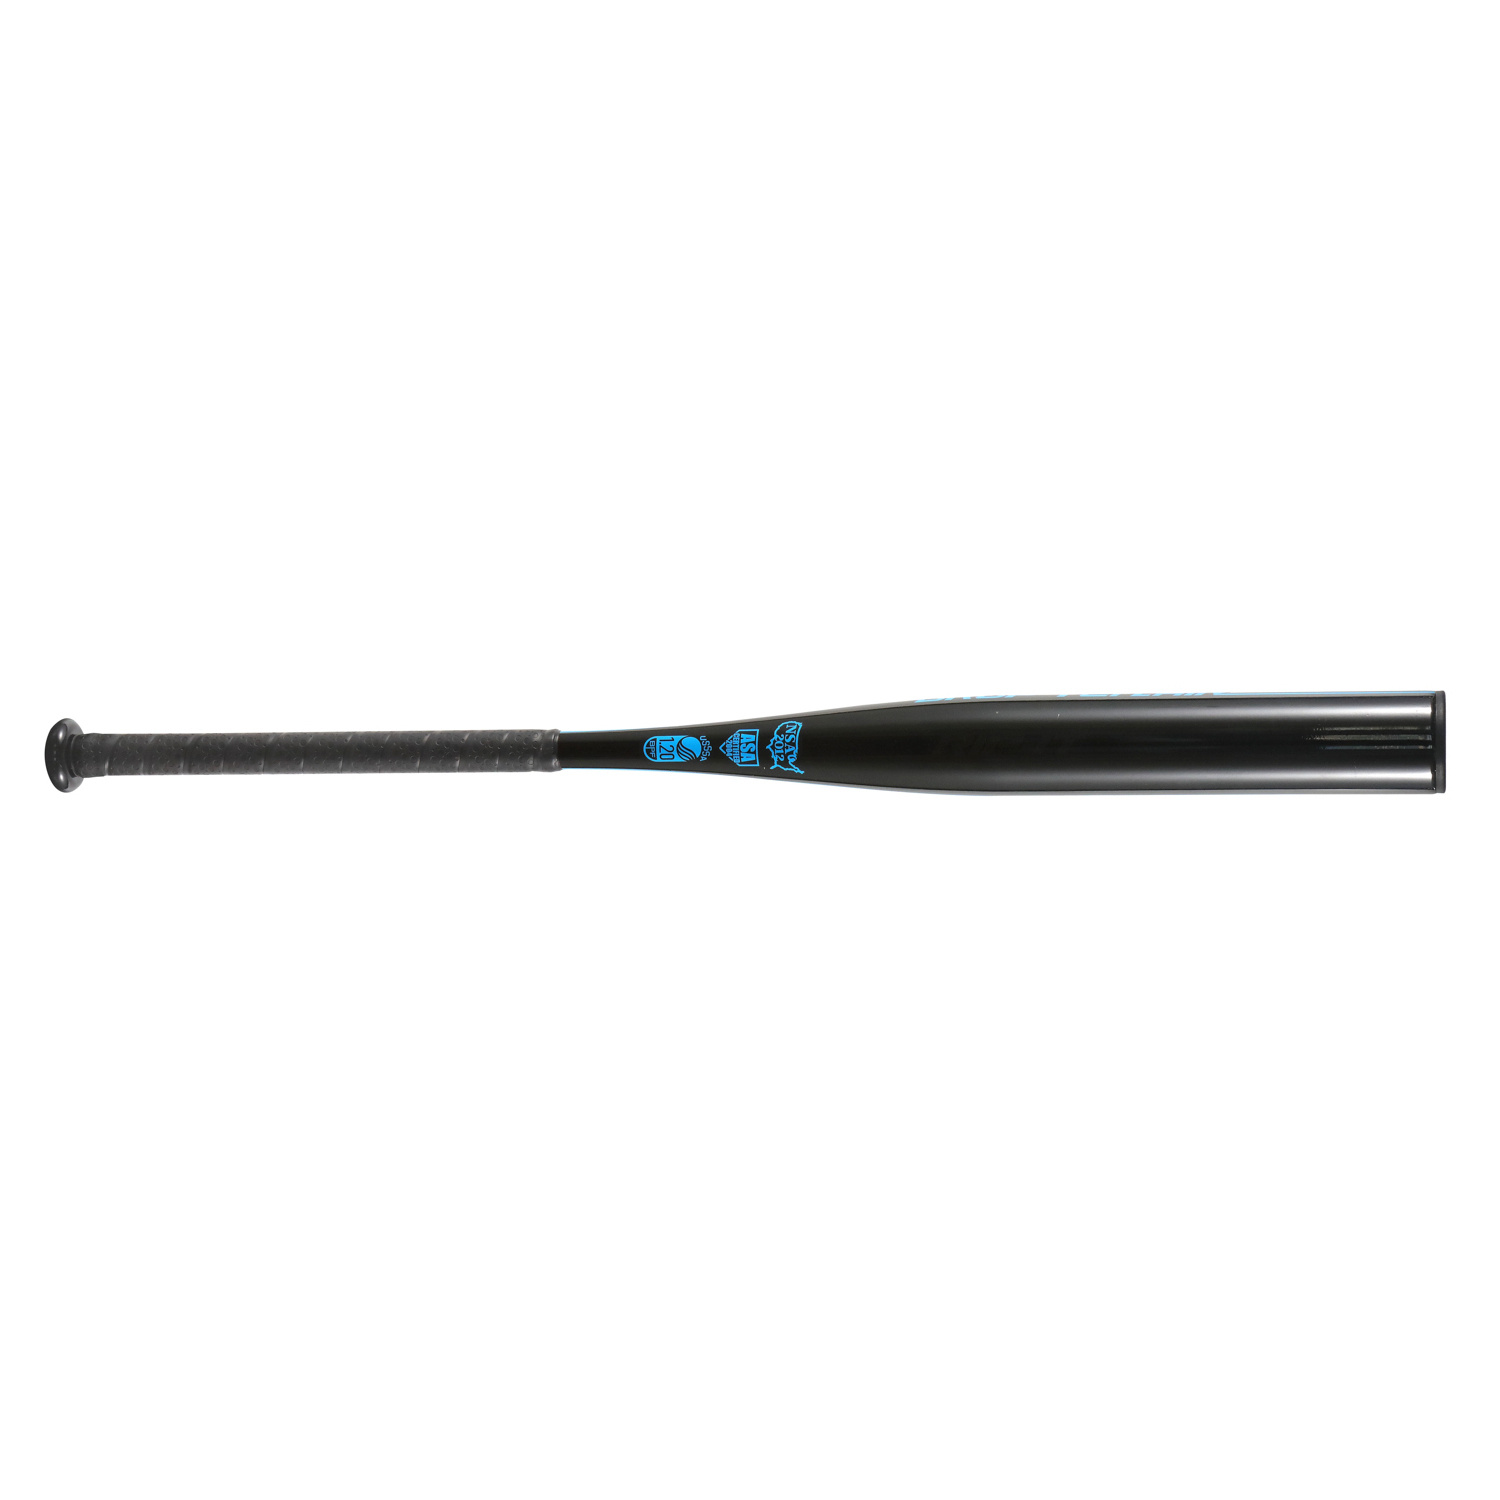 High Quality Custom Logo Wholesale Composite Fastpitch Softball Bat